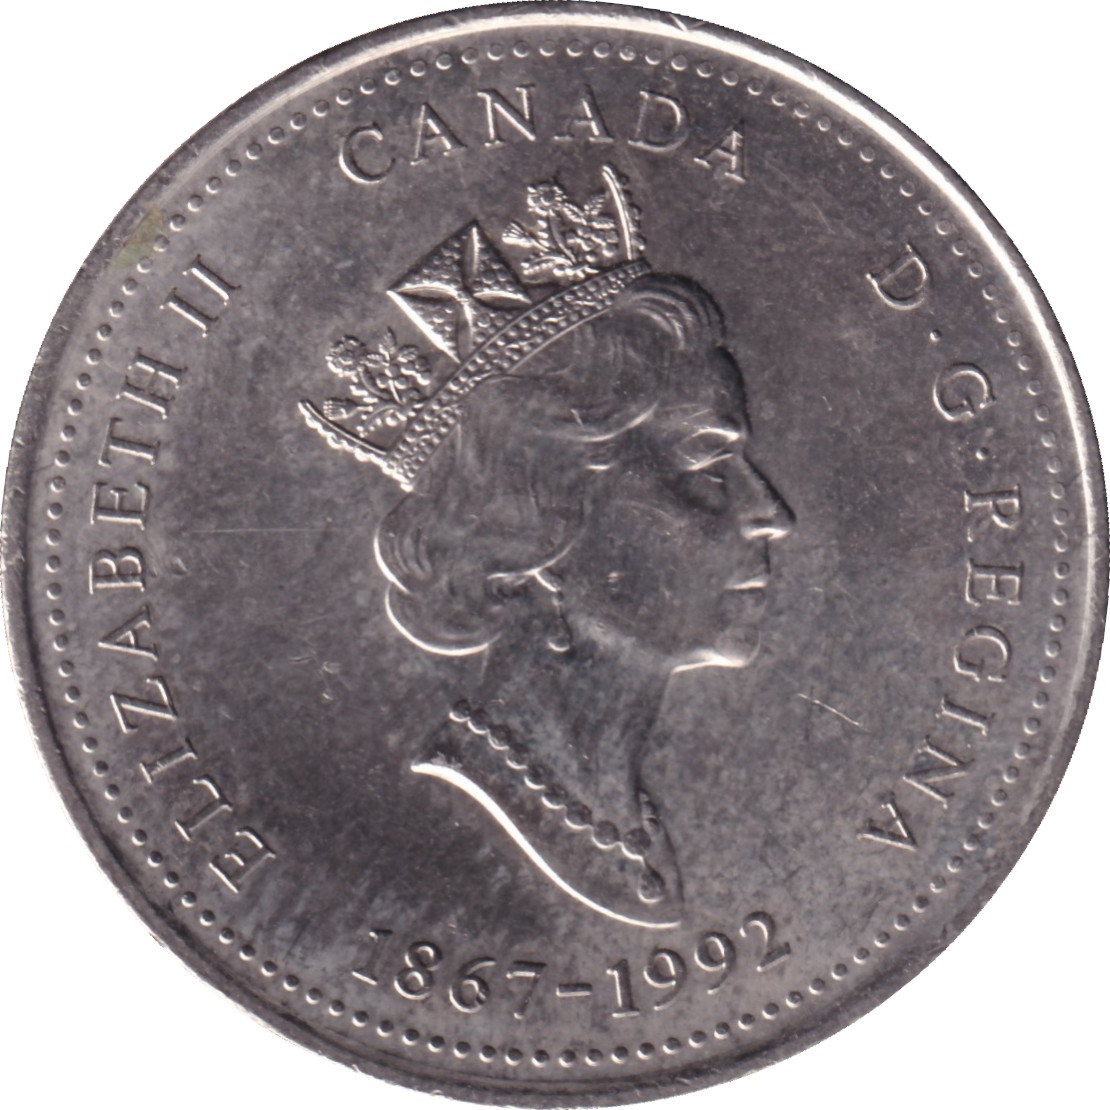 25 cents - Manitoba